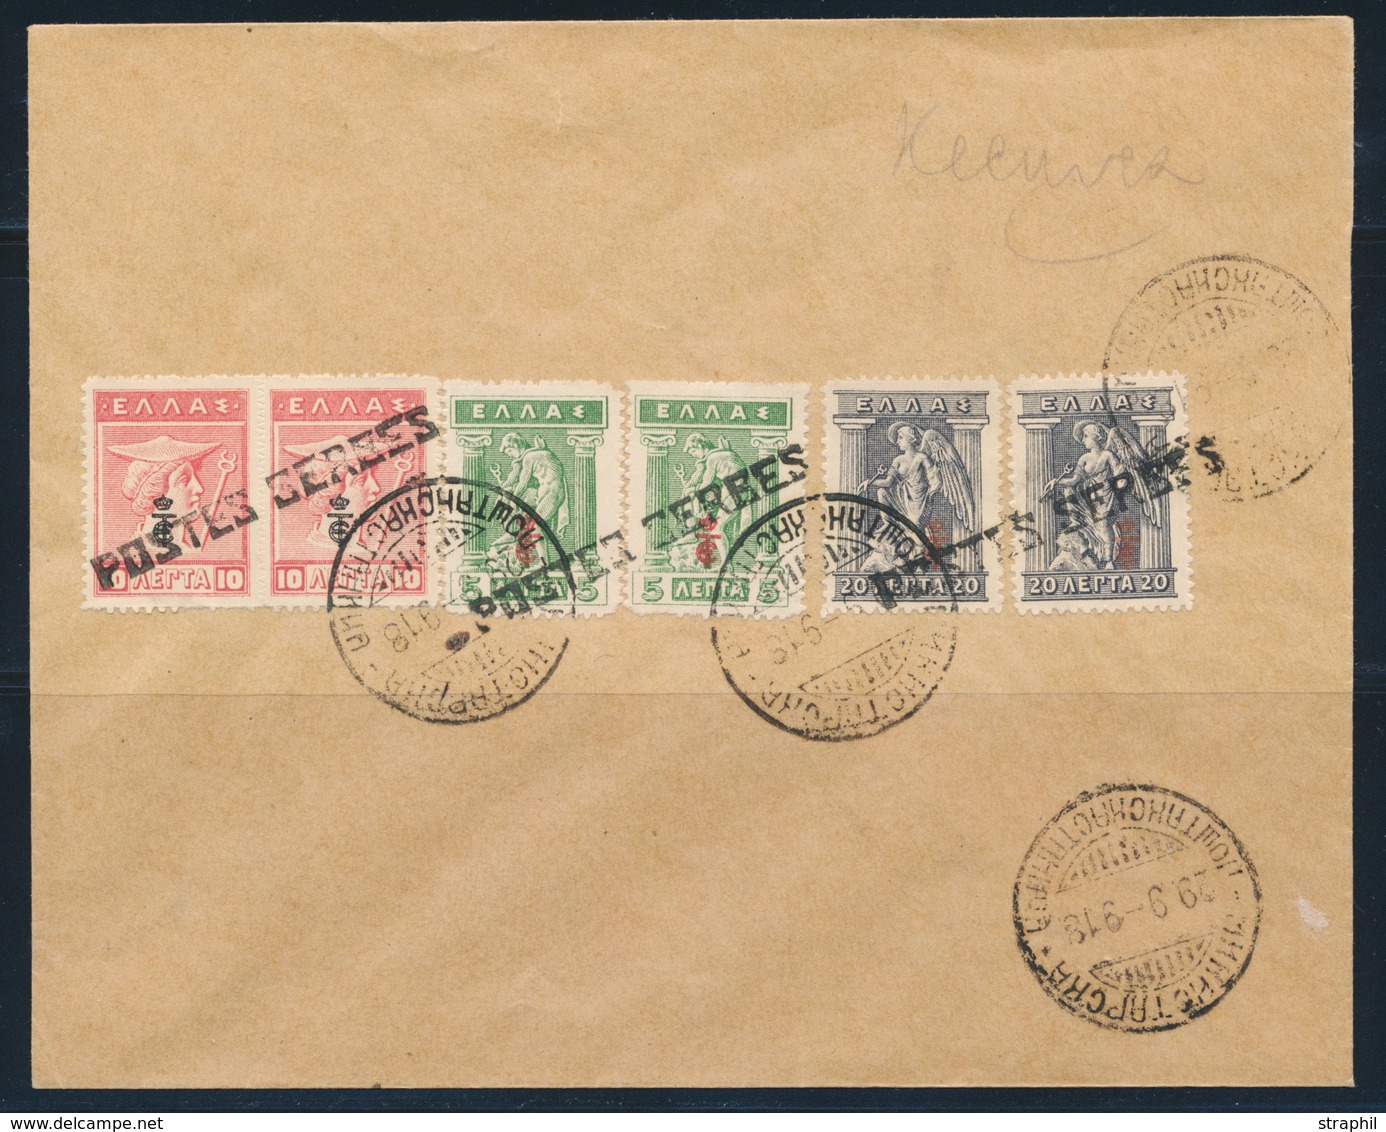 L POSTES SERBES - L - Pli Du 29/9/1918 - Afft 6 T.  - TB - War Stamps